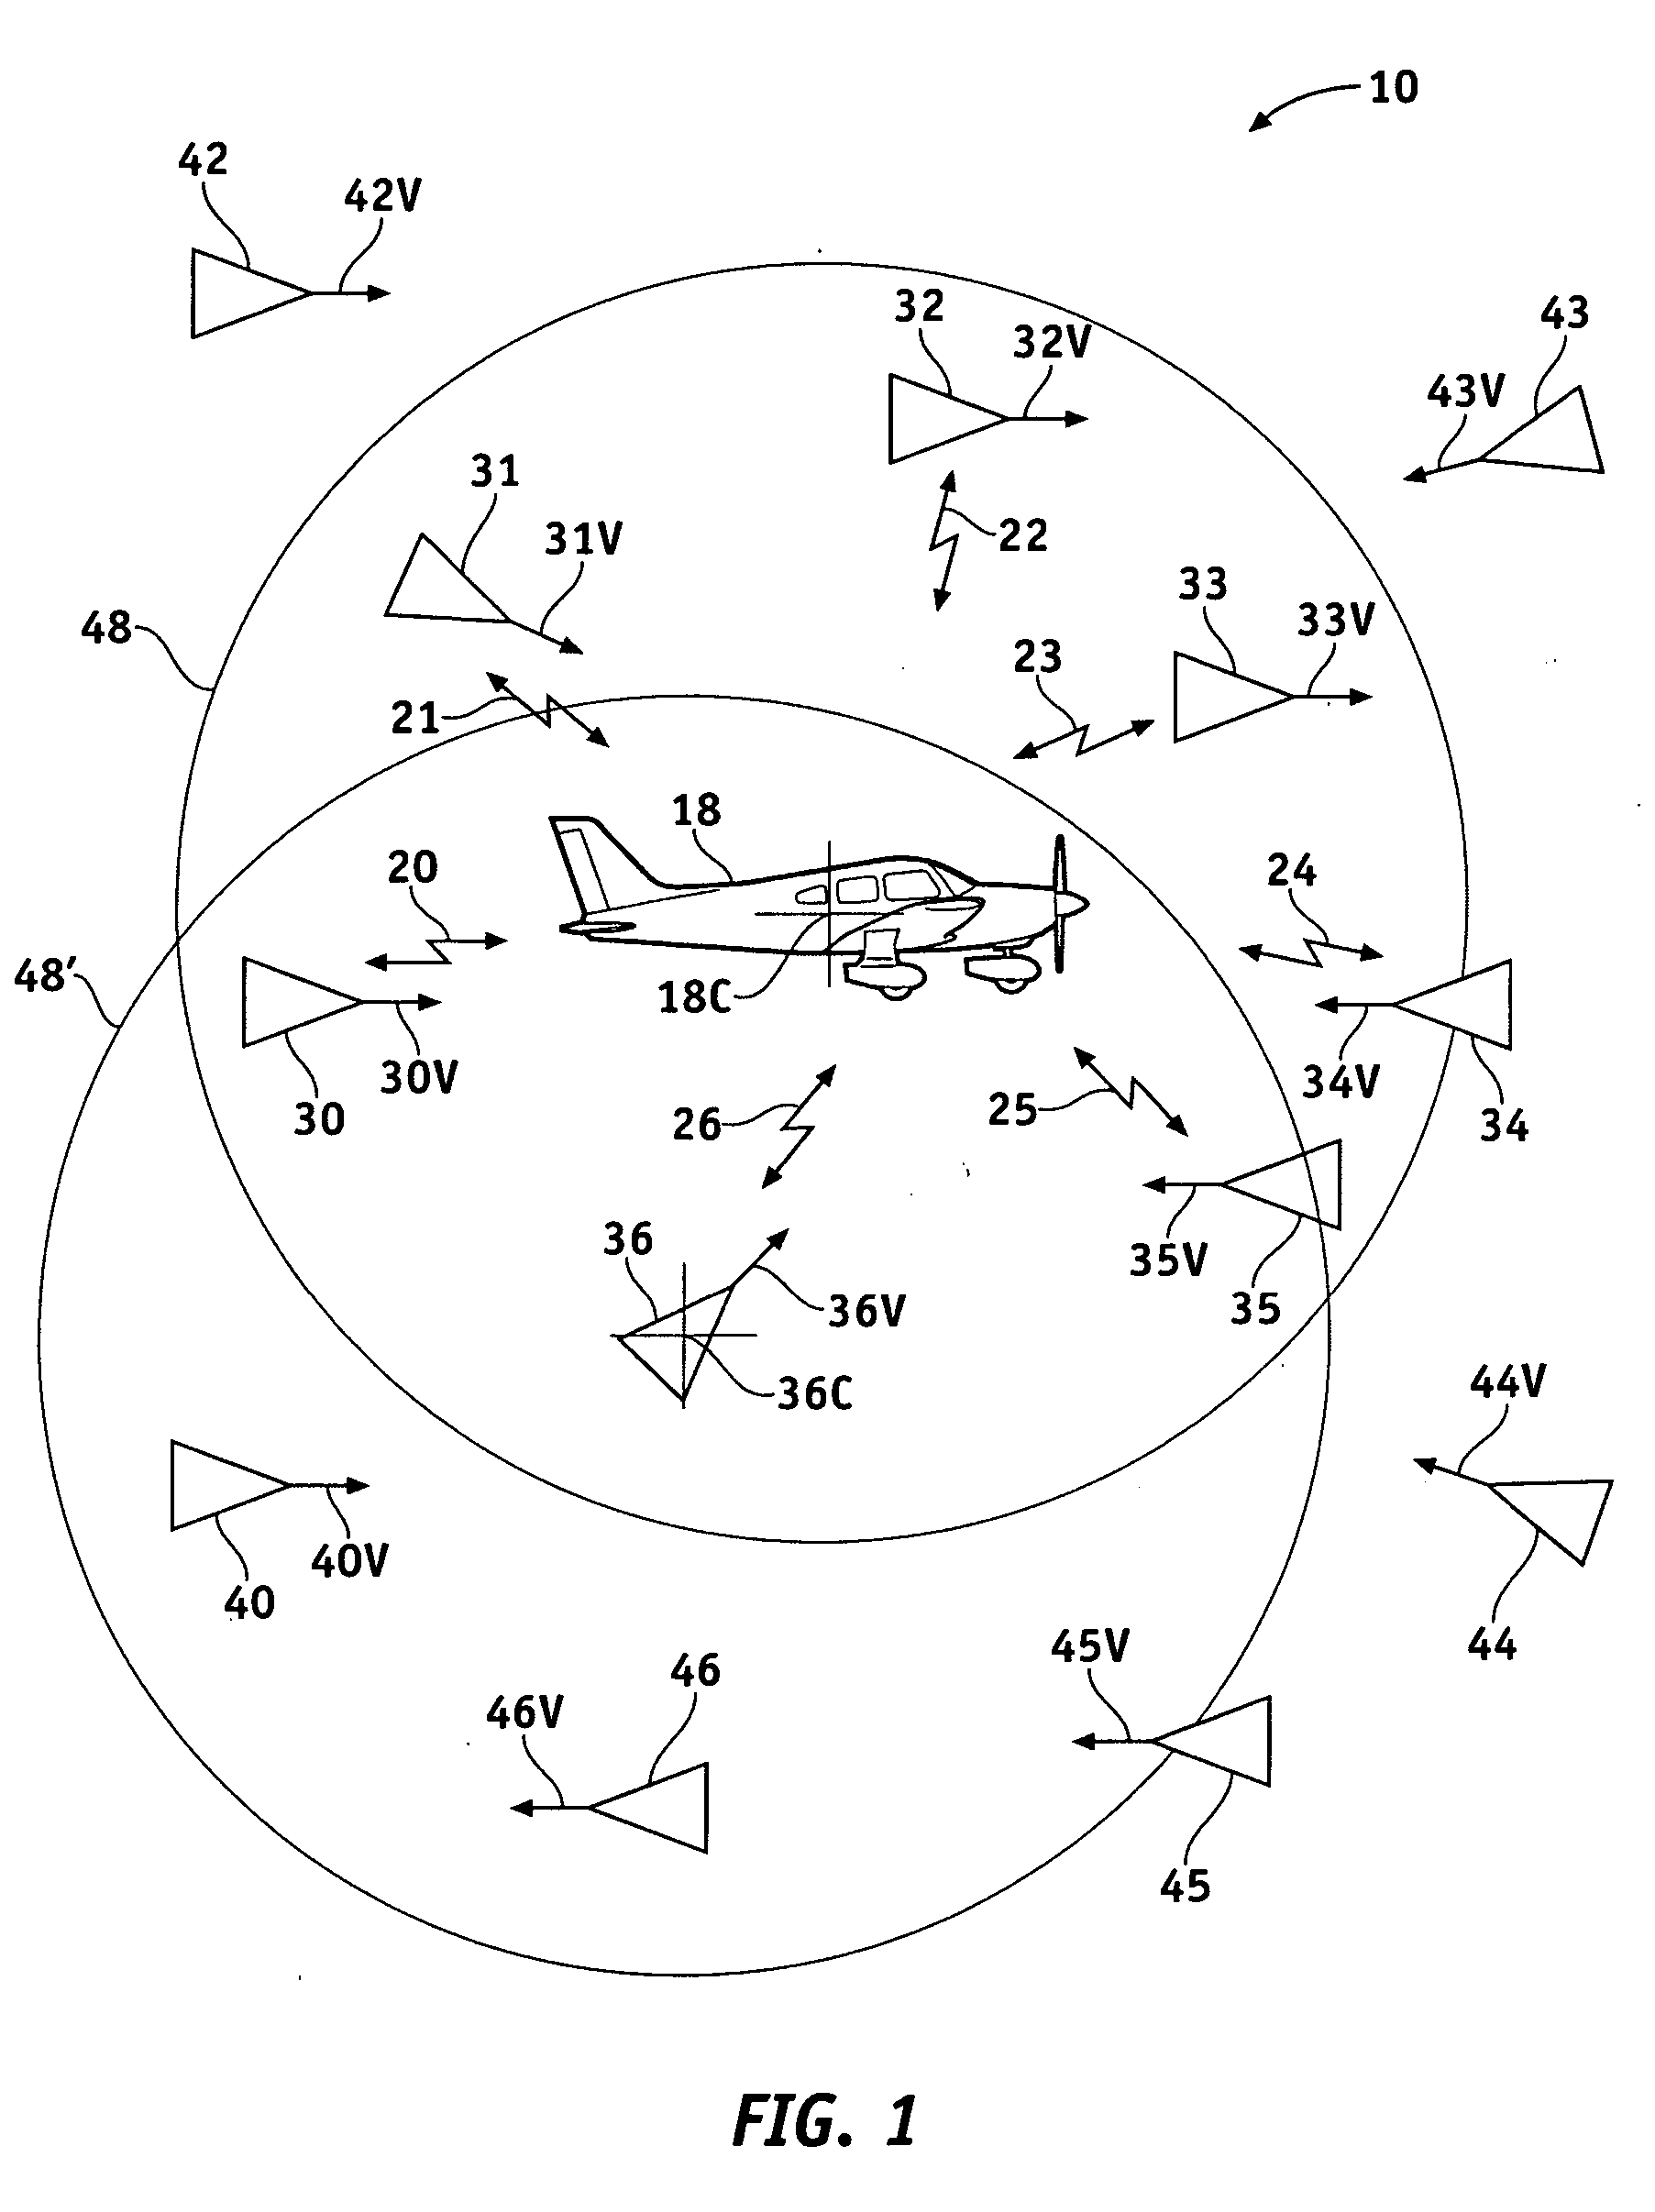 Aircraft traffic warning system using an ad-hoc radio network